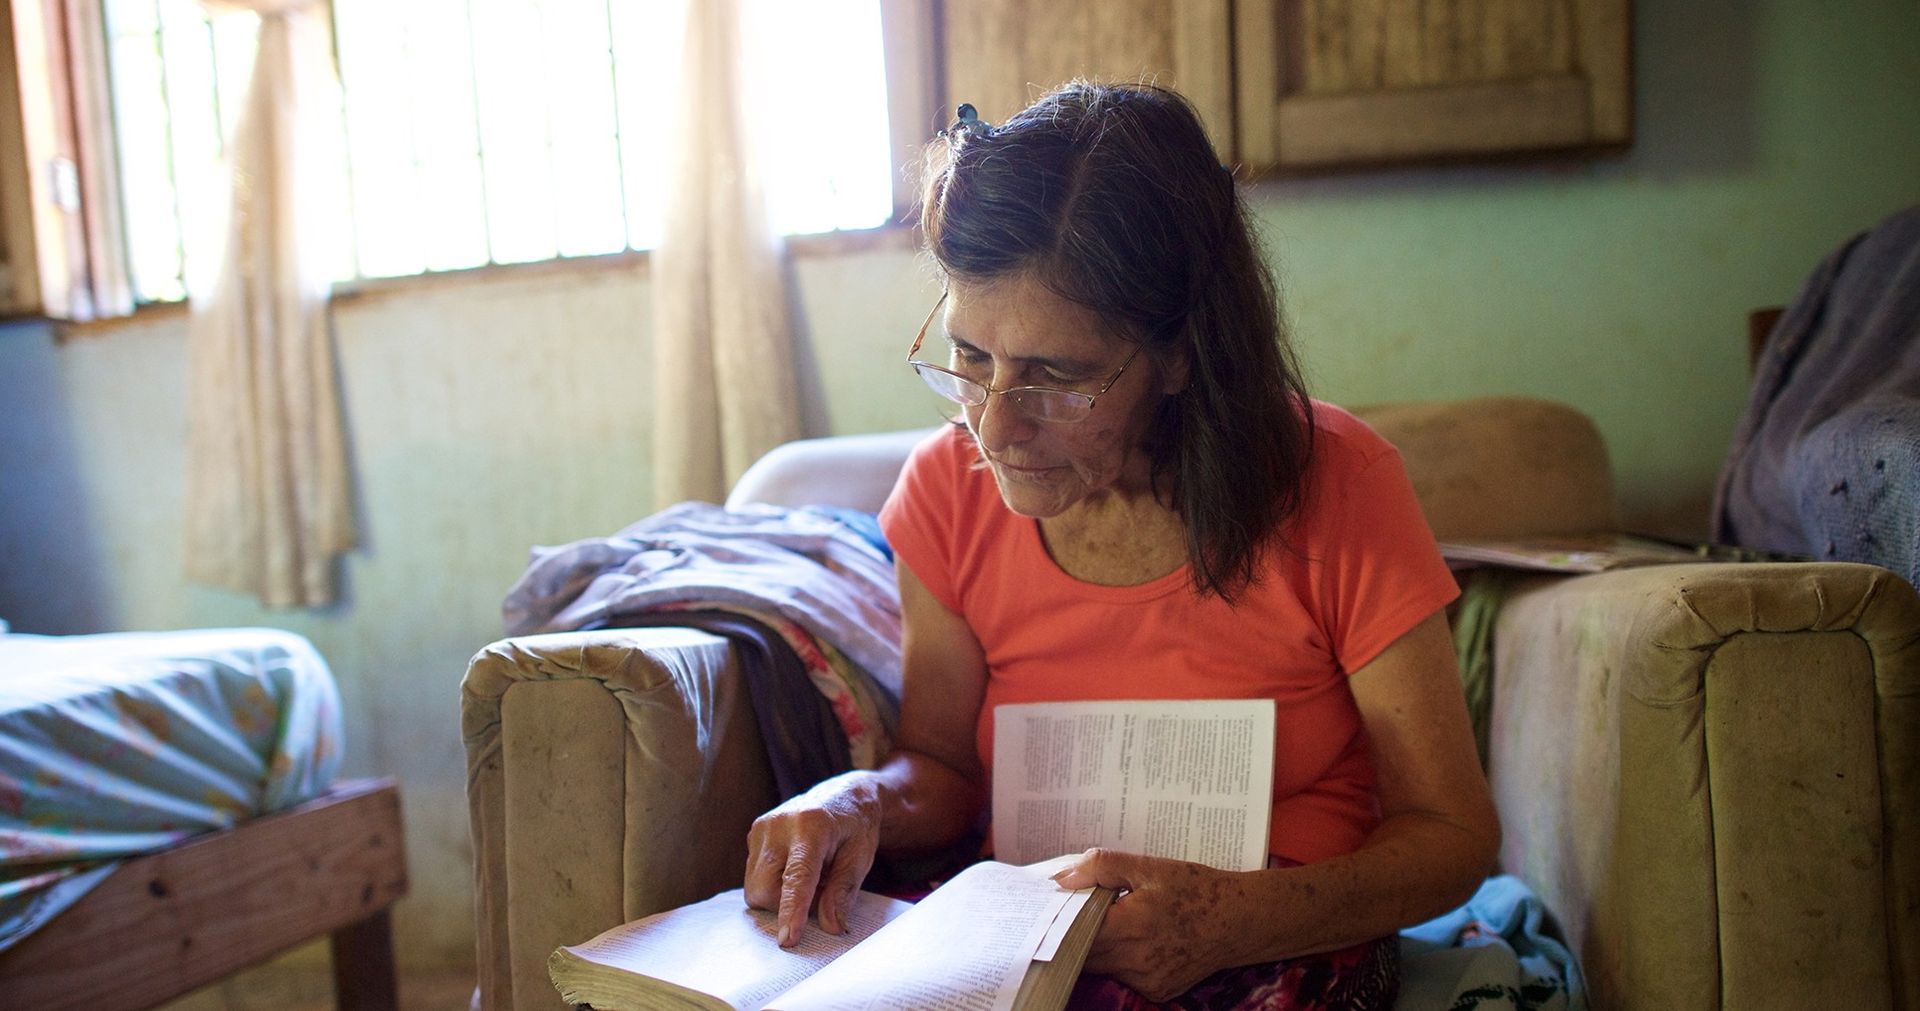 Adult female sitting reading scriptures.